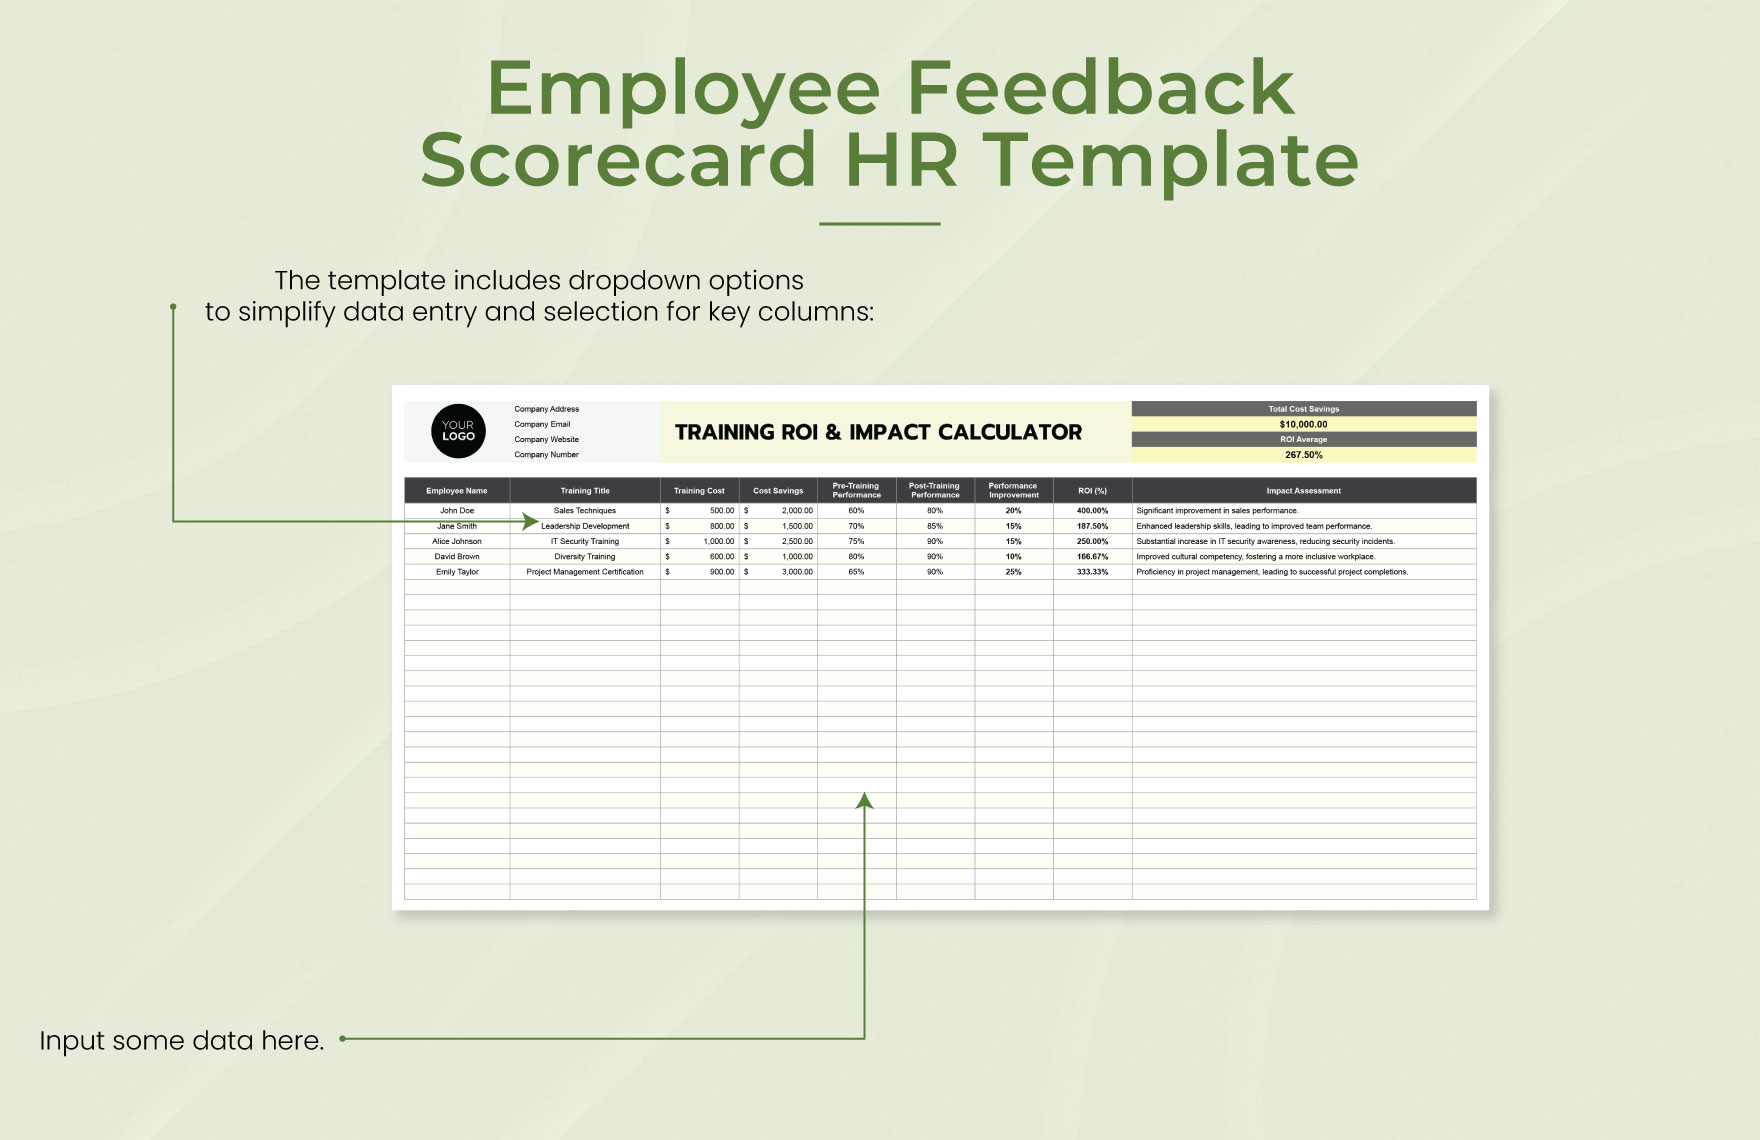 Employee Feedback Scorecard HR Template